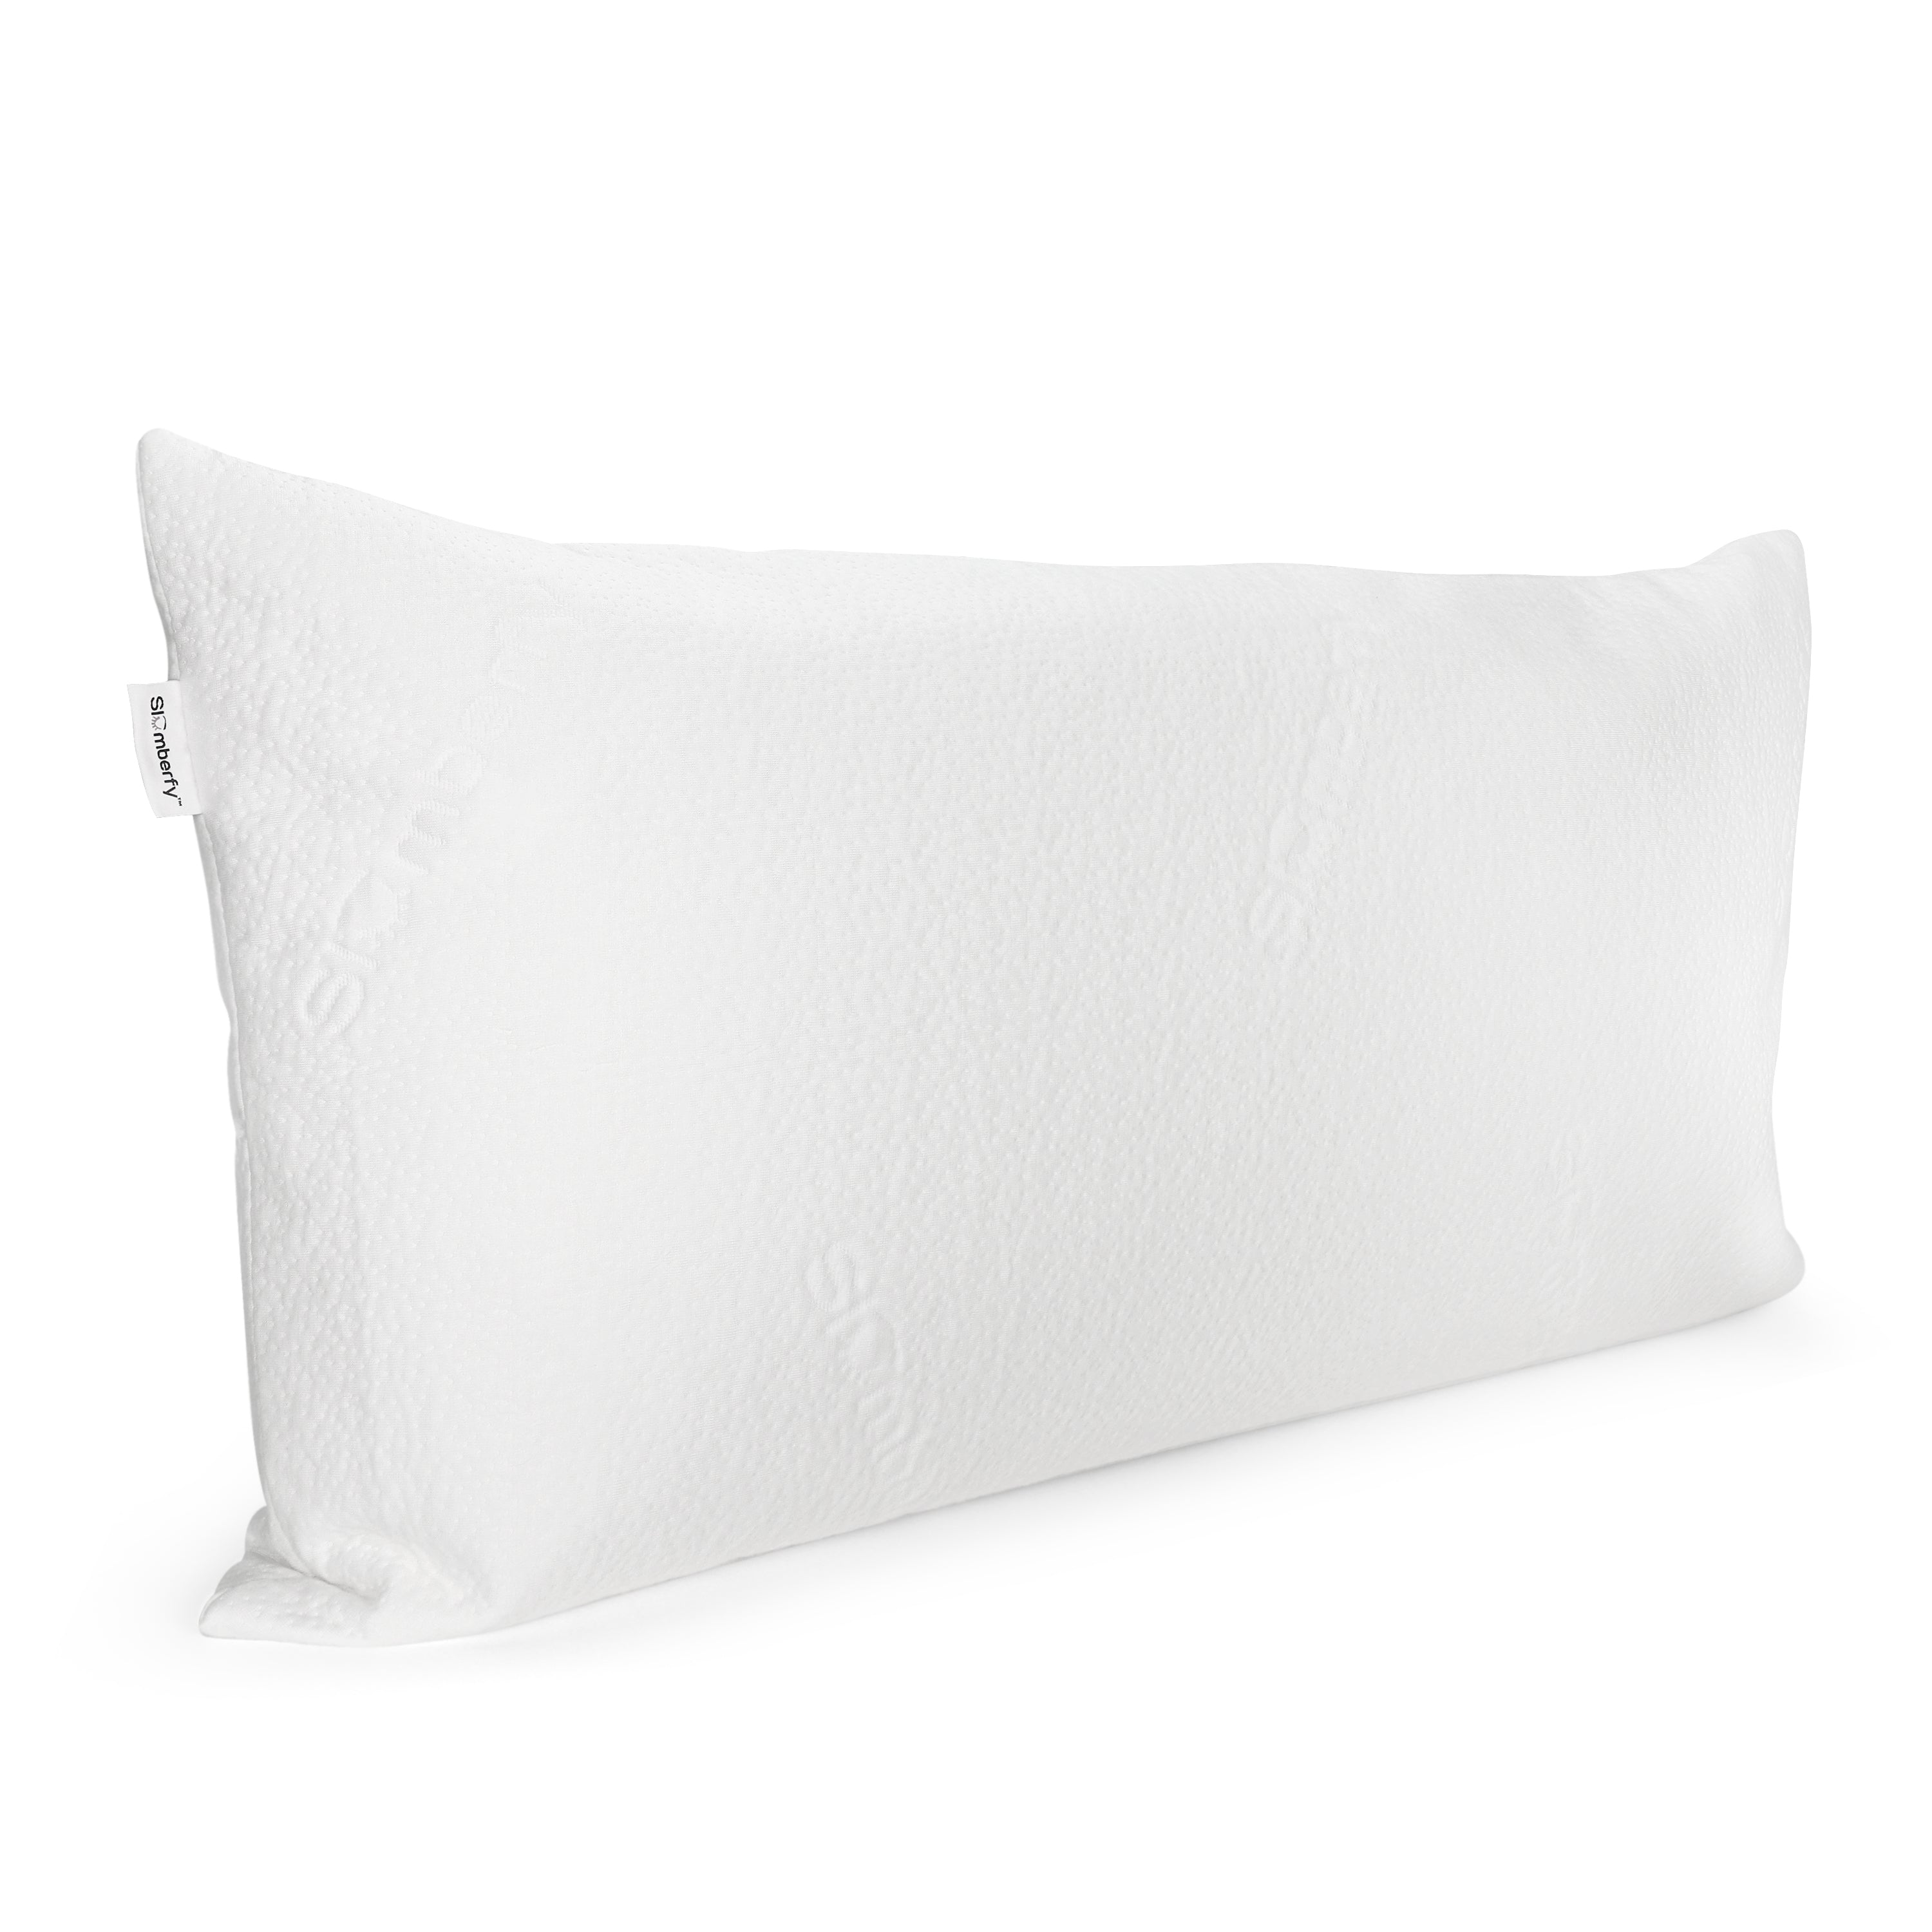 Bamboo Pillow Protector - Waterproof Hypoallergenic Dust Proof